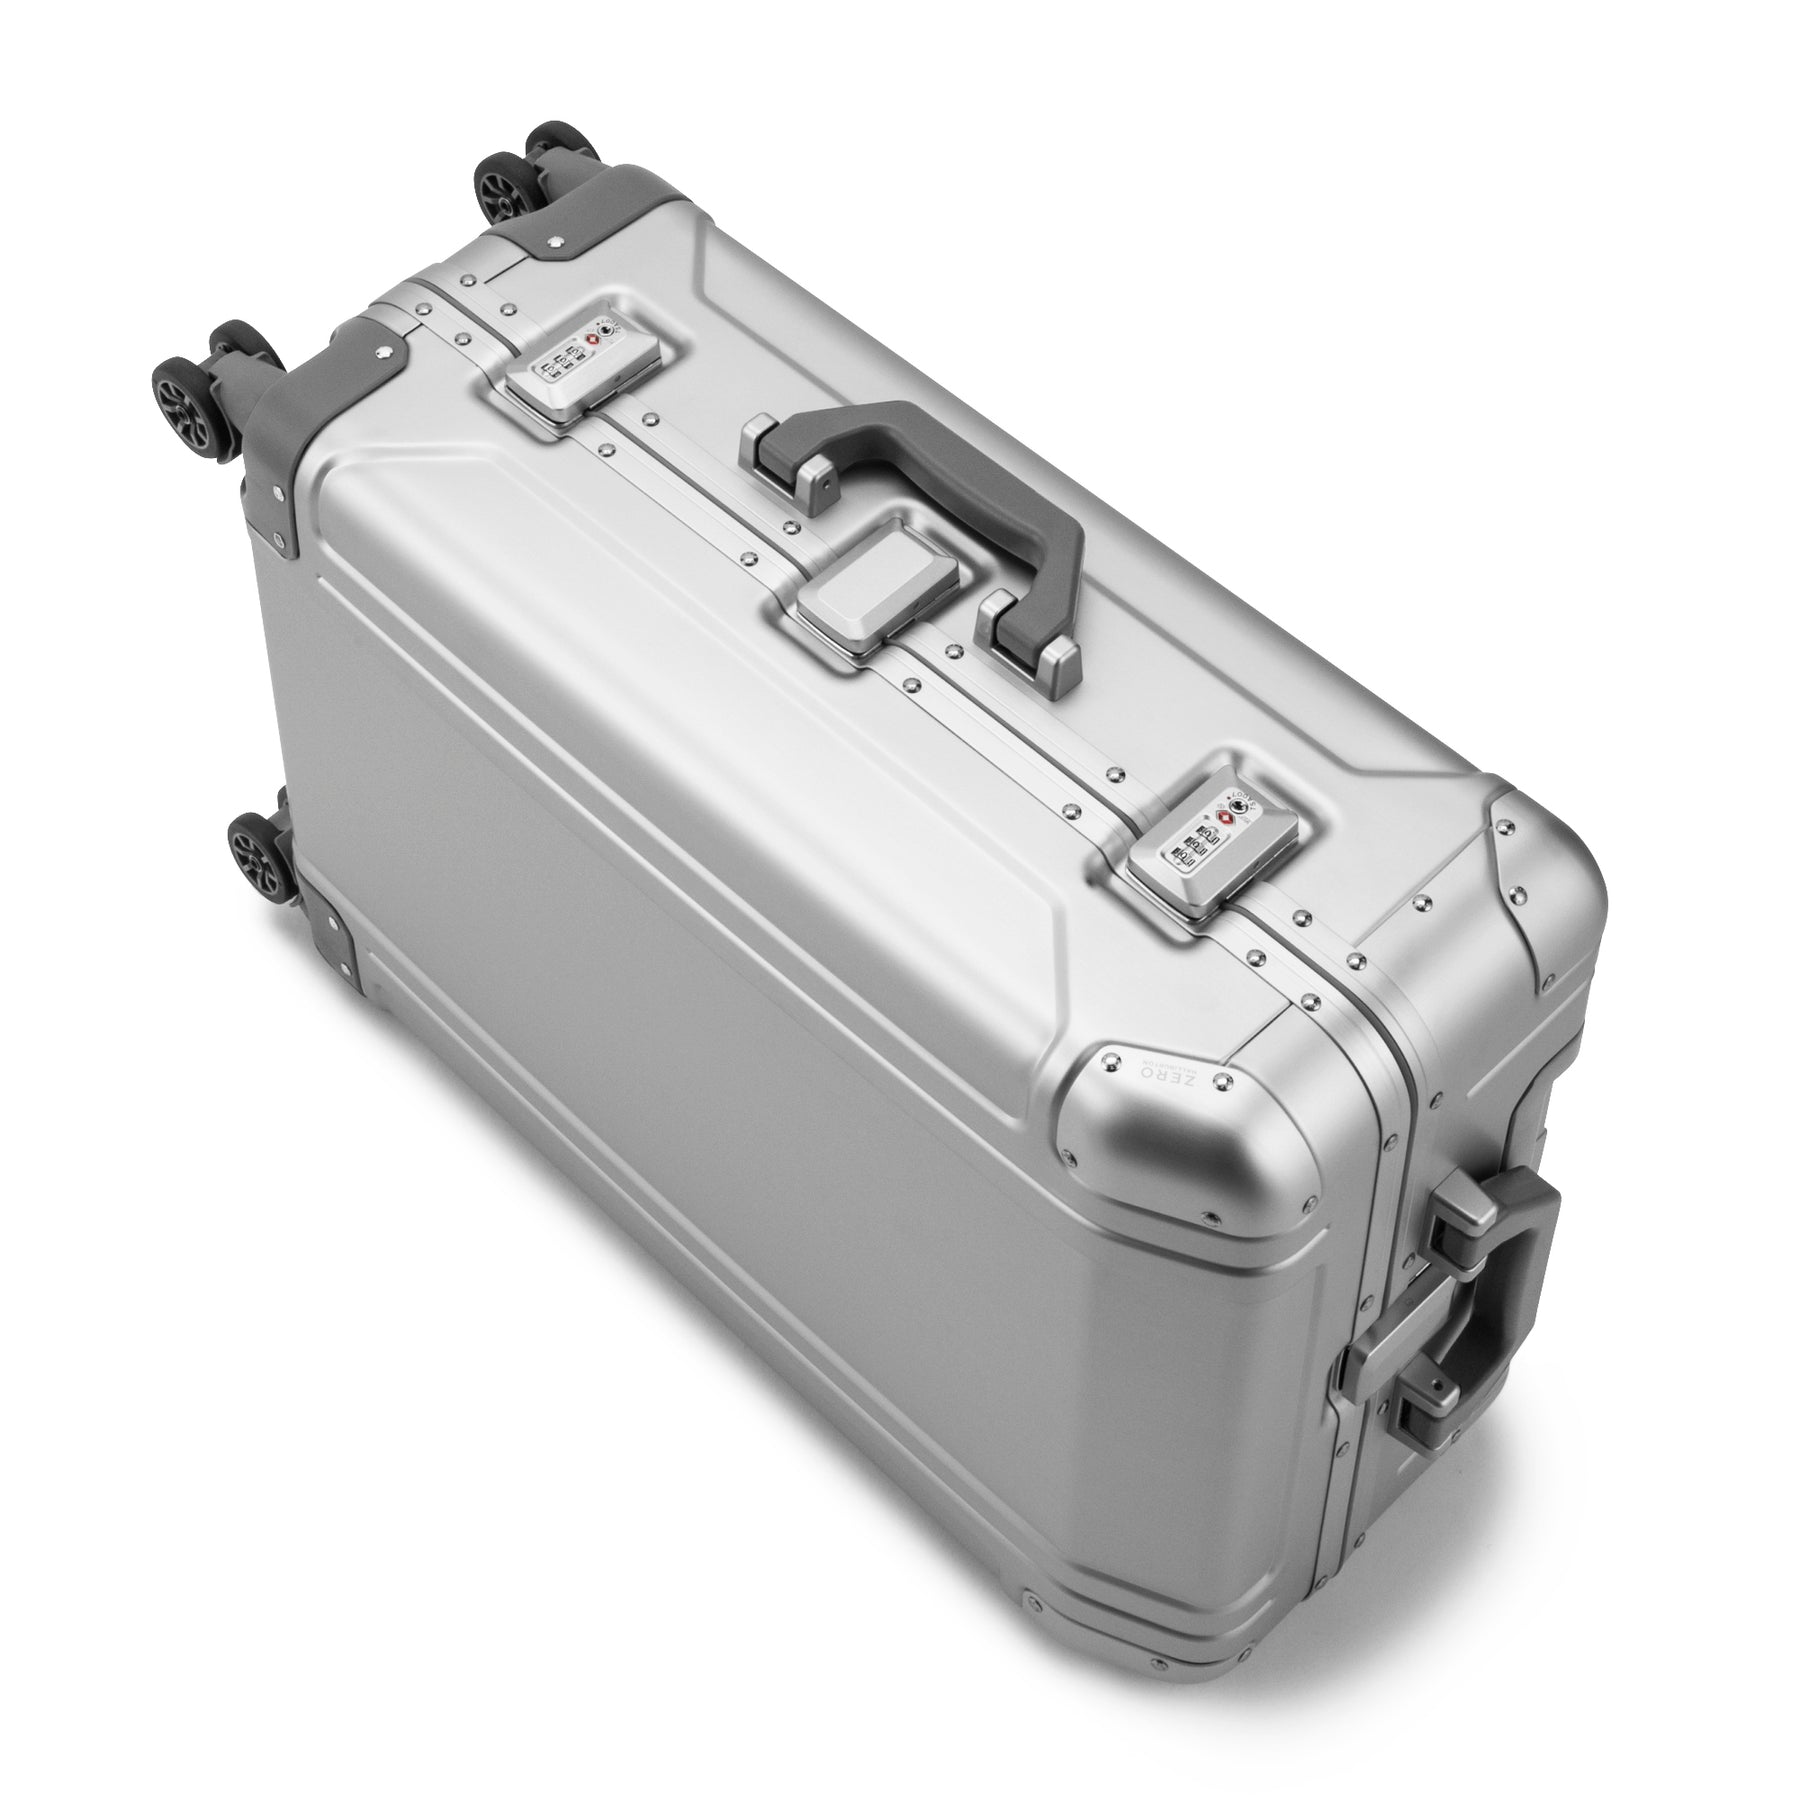 Geo Aluminum 3.0 |   24" Spinner Travel Case 58L